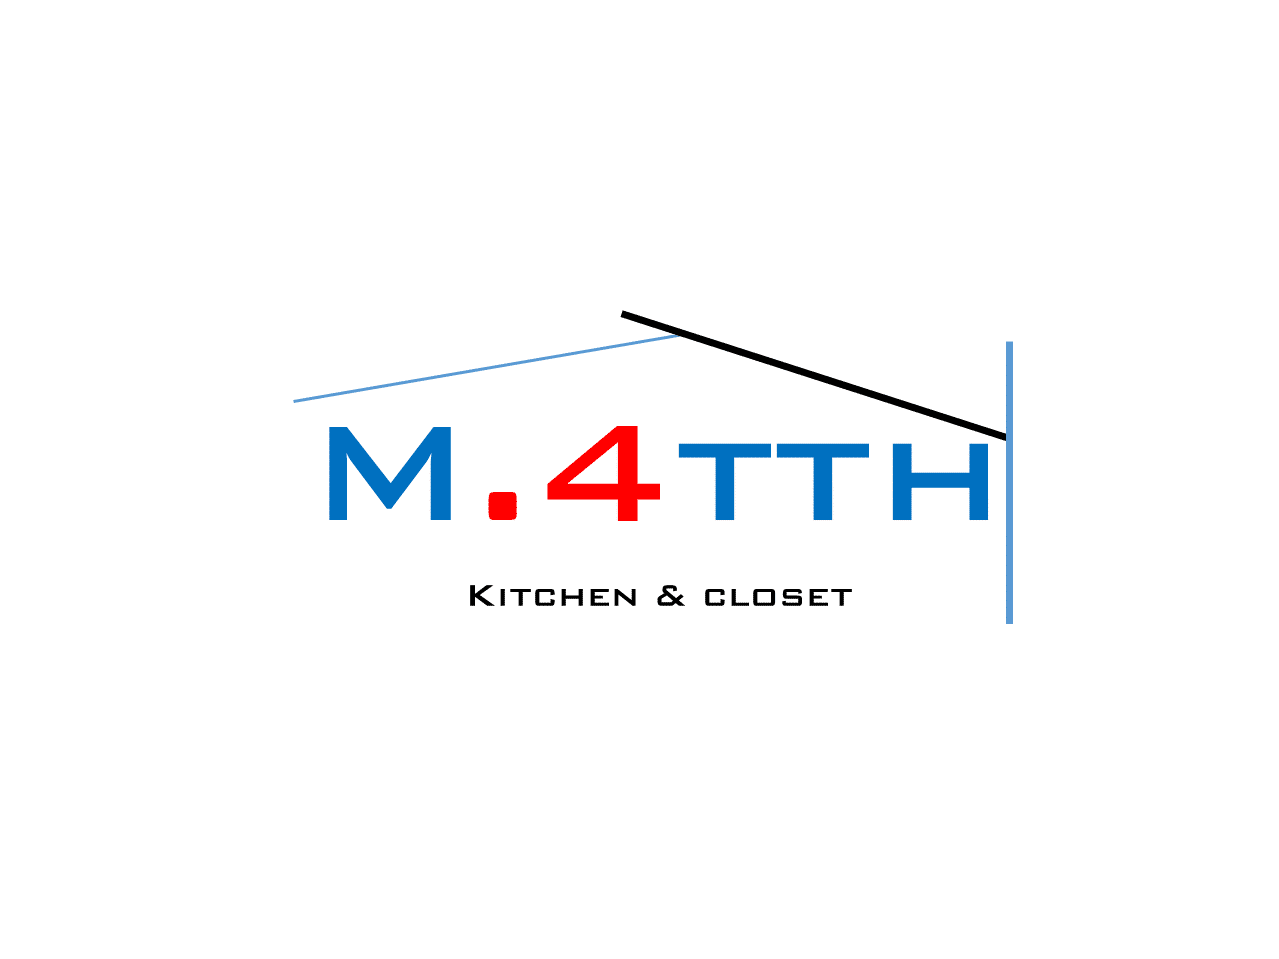 M.4Tth